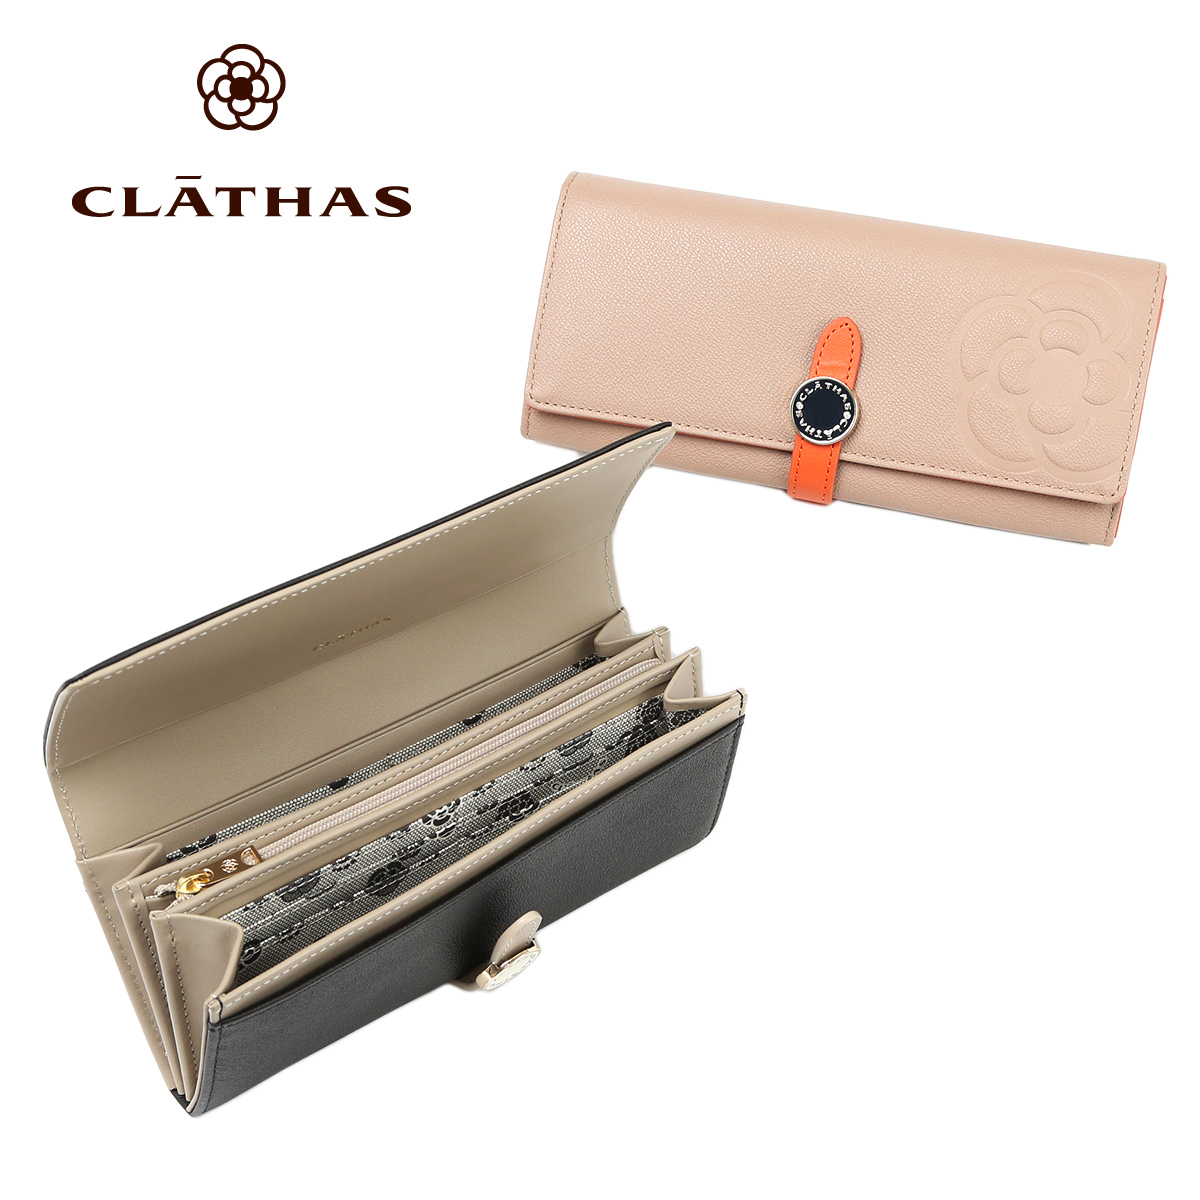 Clathas クレイサス 財布 - 小物